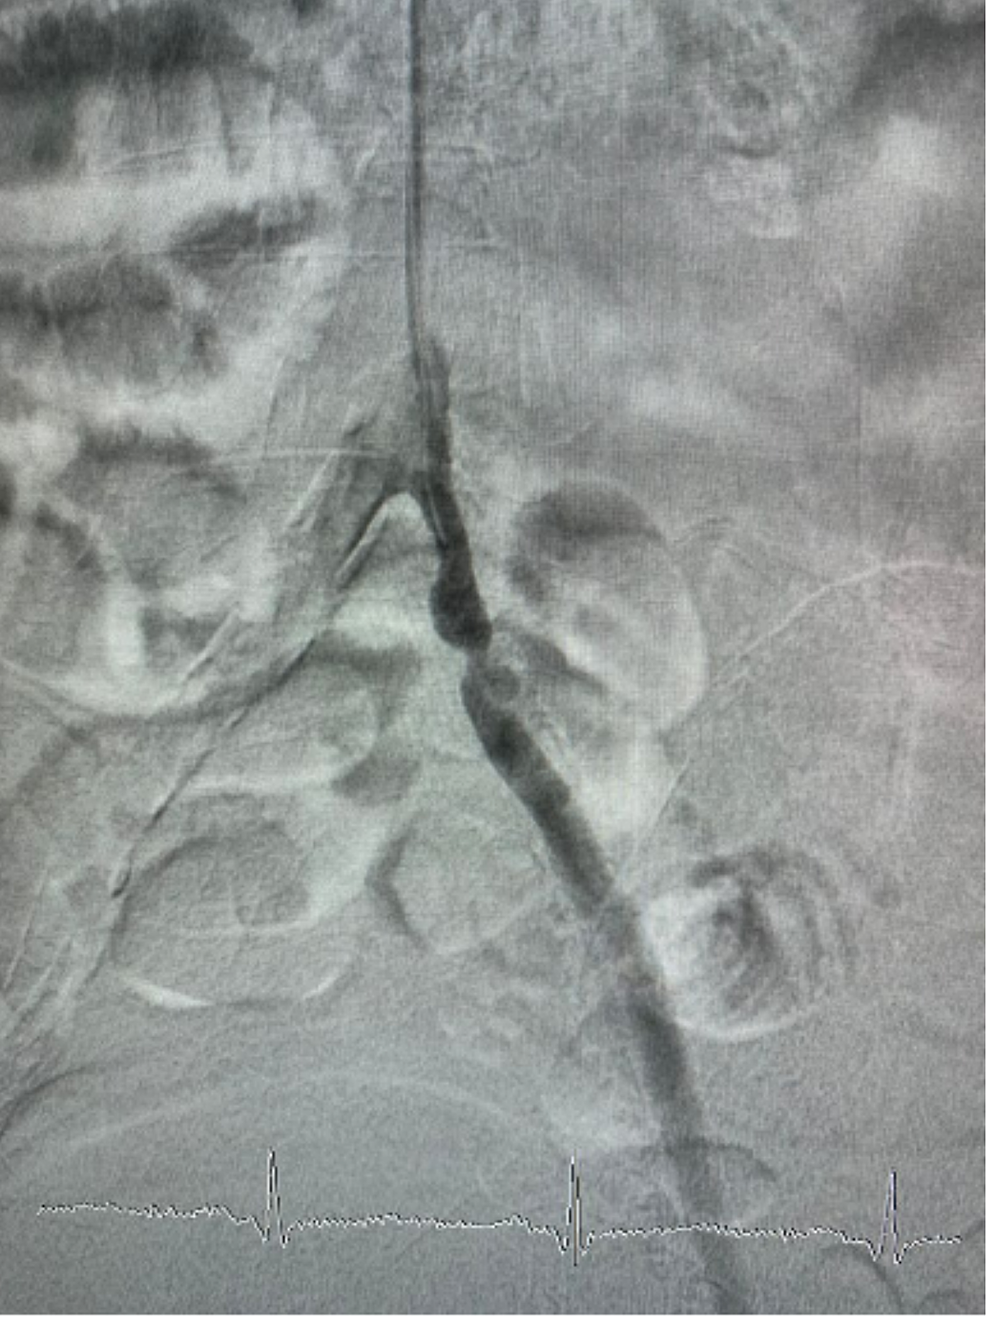 Arteriography-in-the-left-leg